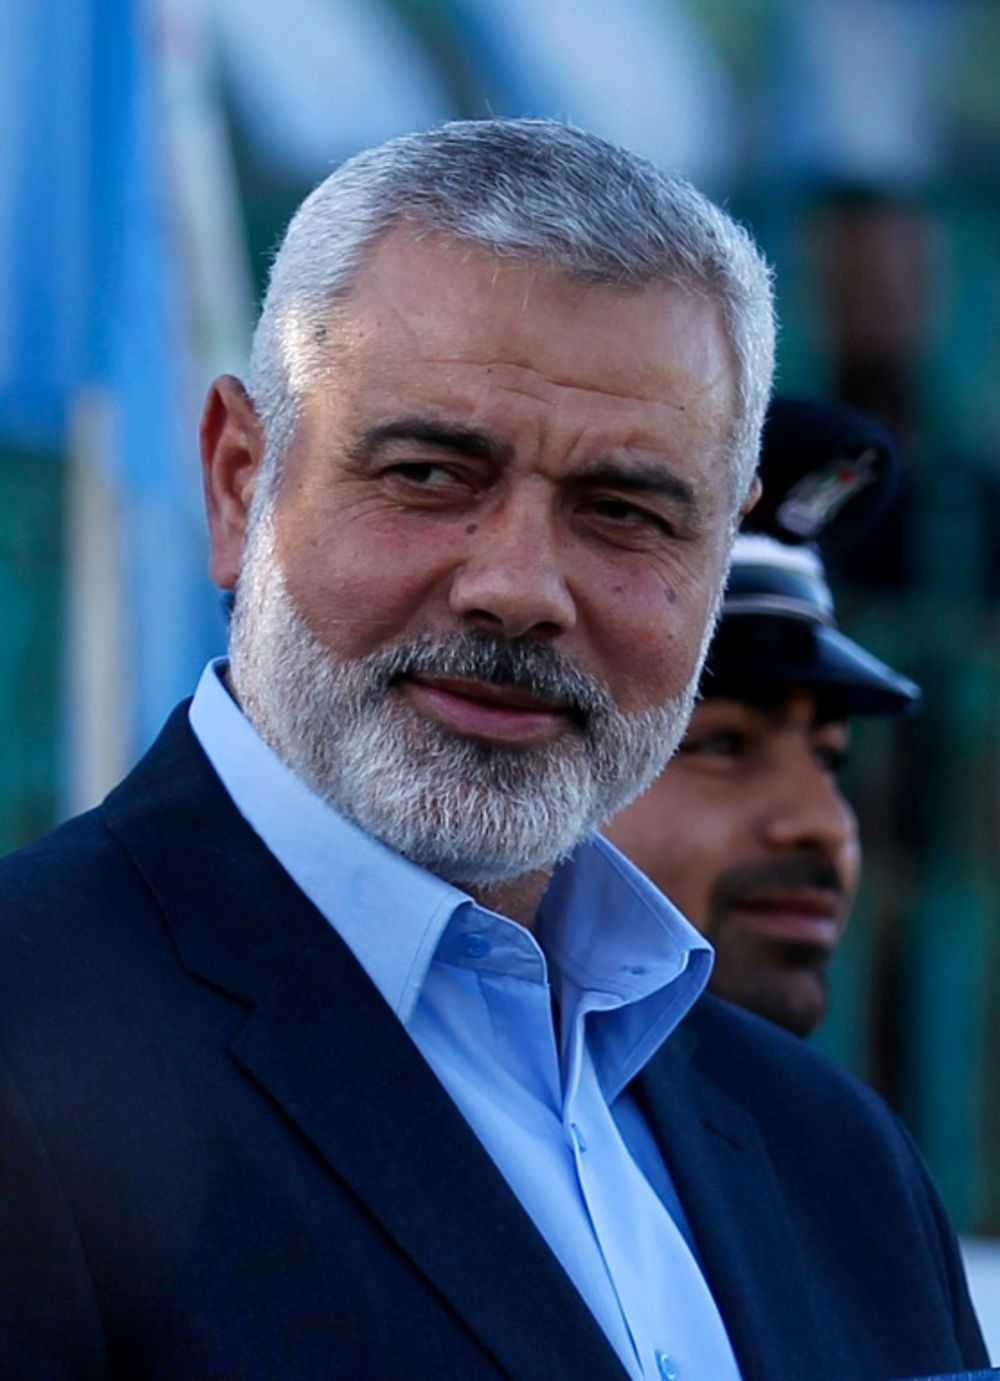 Hamas leader Ismail Haniyeh ruled the Gaza Strip from 2006-2014